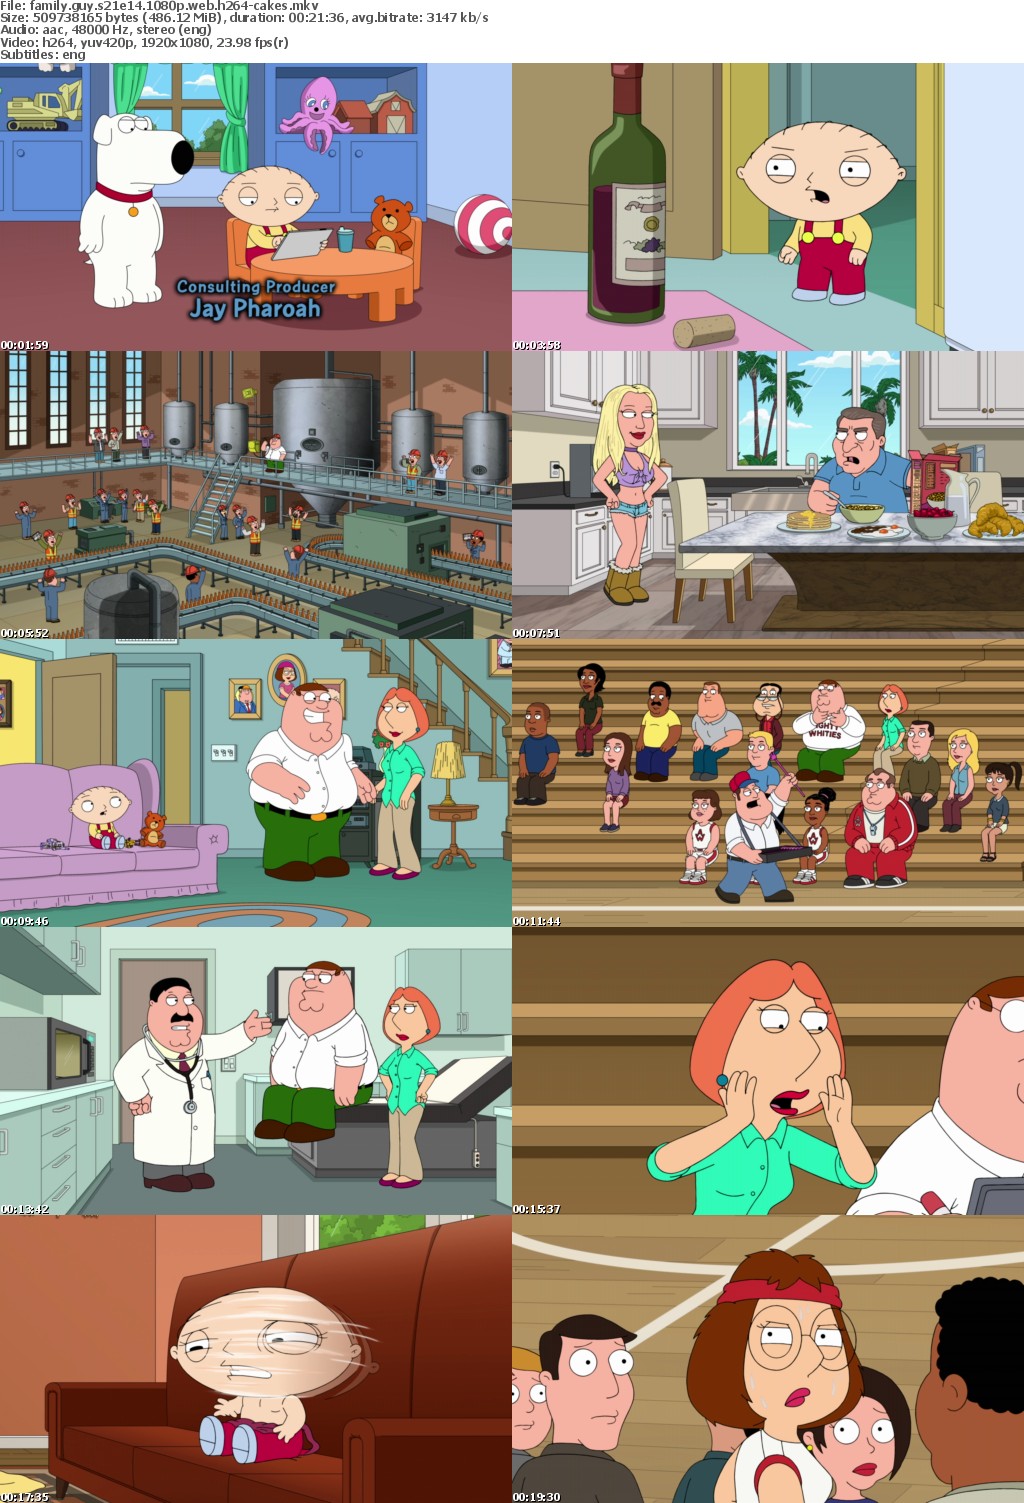 Family Guy S21E14 1080p WEB H264-CAKES